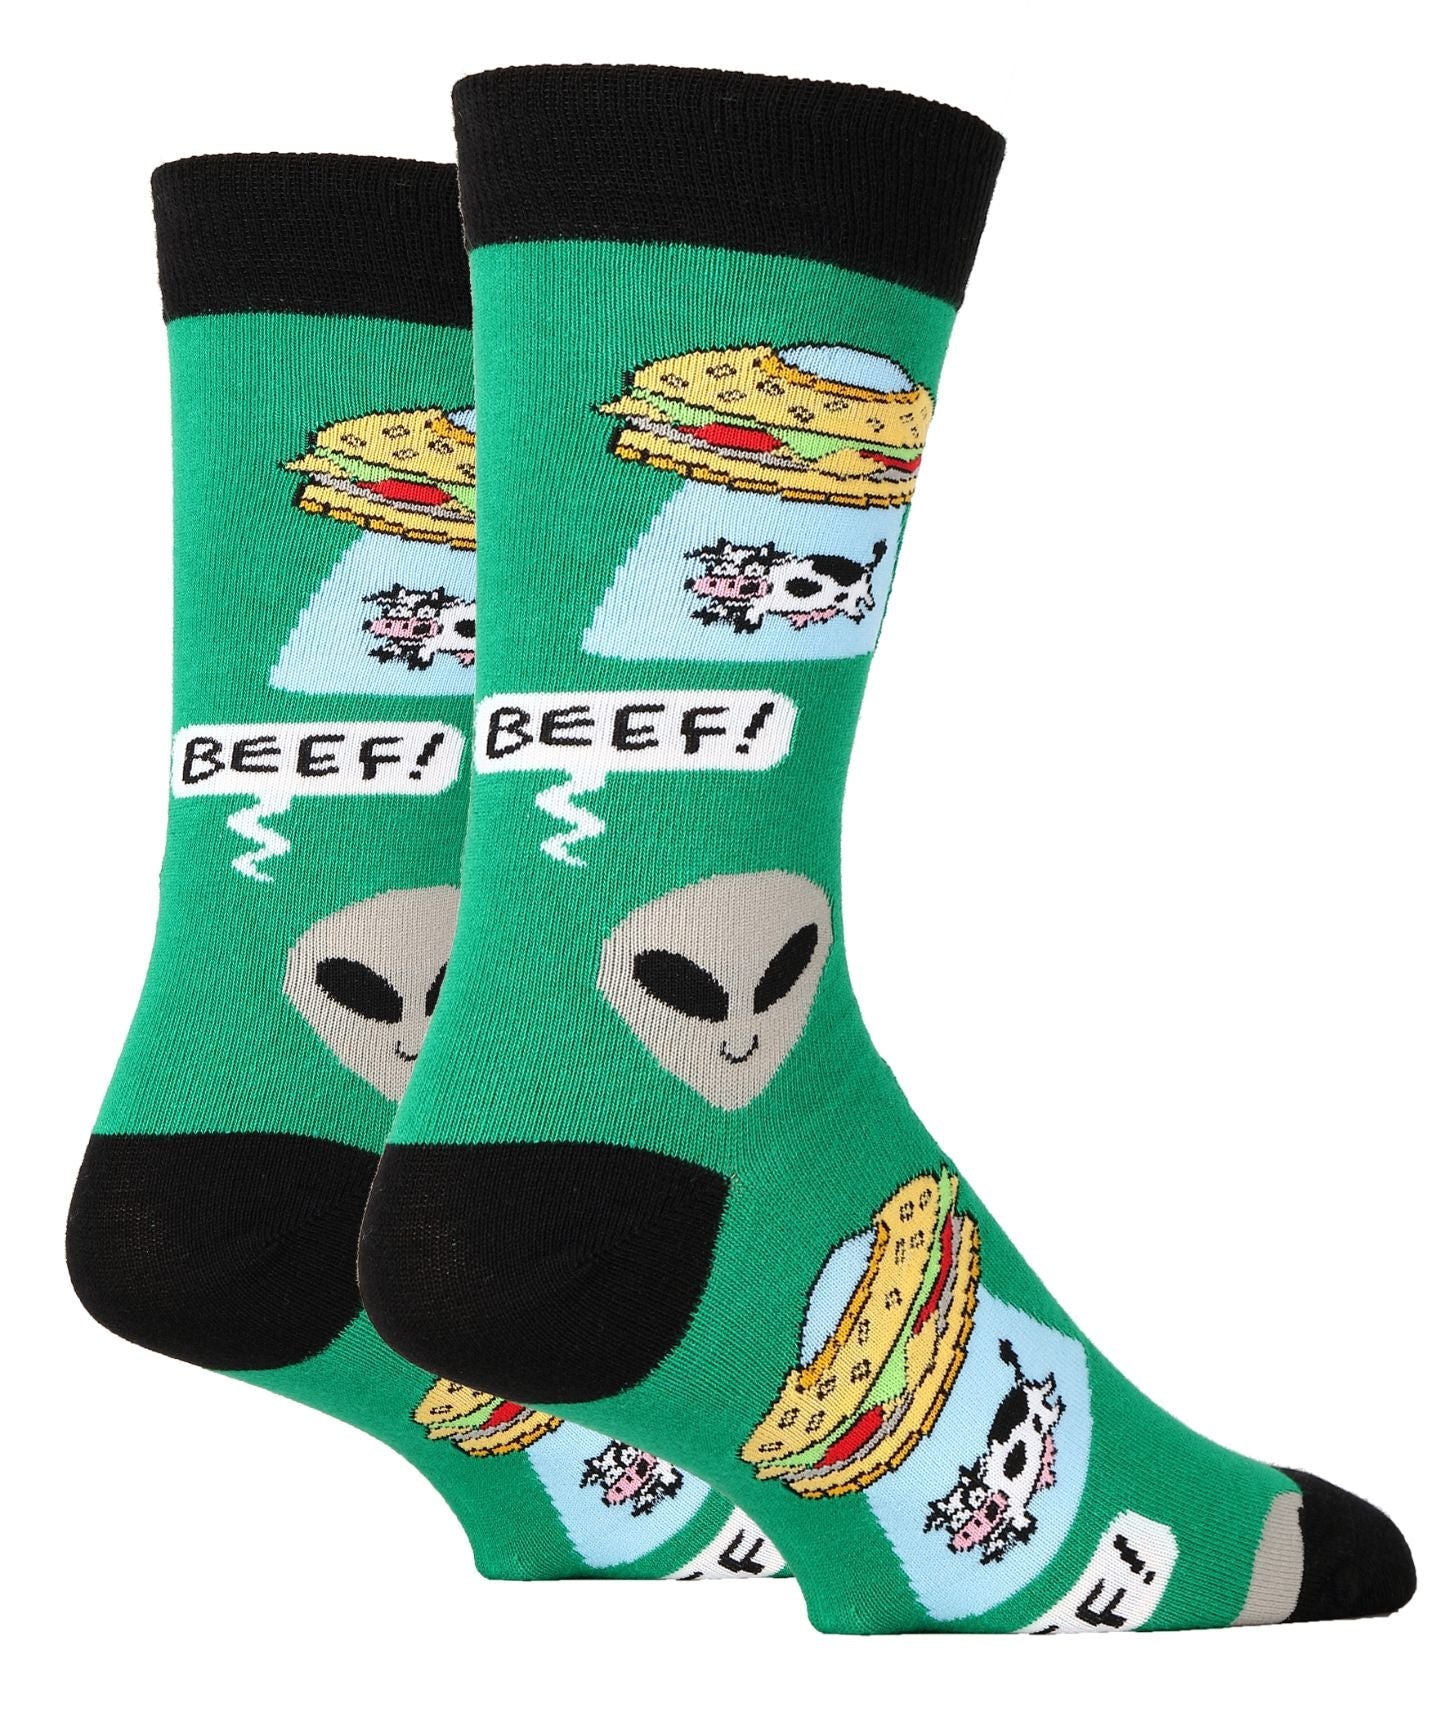 beef-abduction-mens-crew-socks-2-oooh-yeah-socks